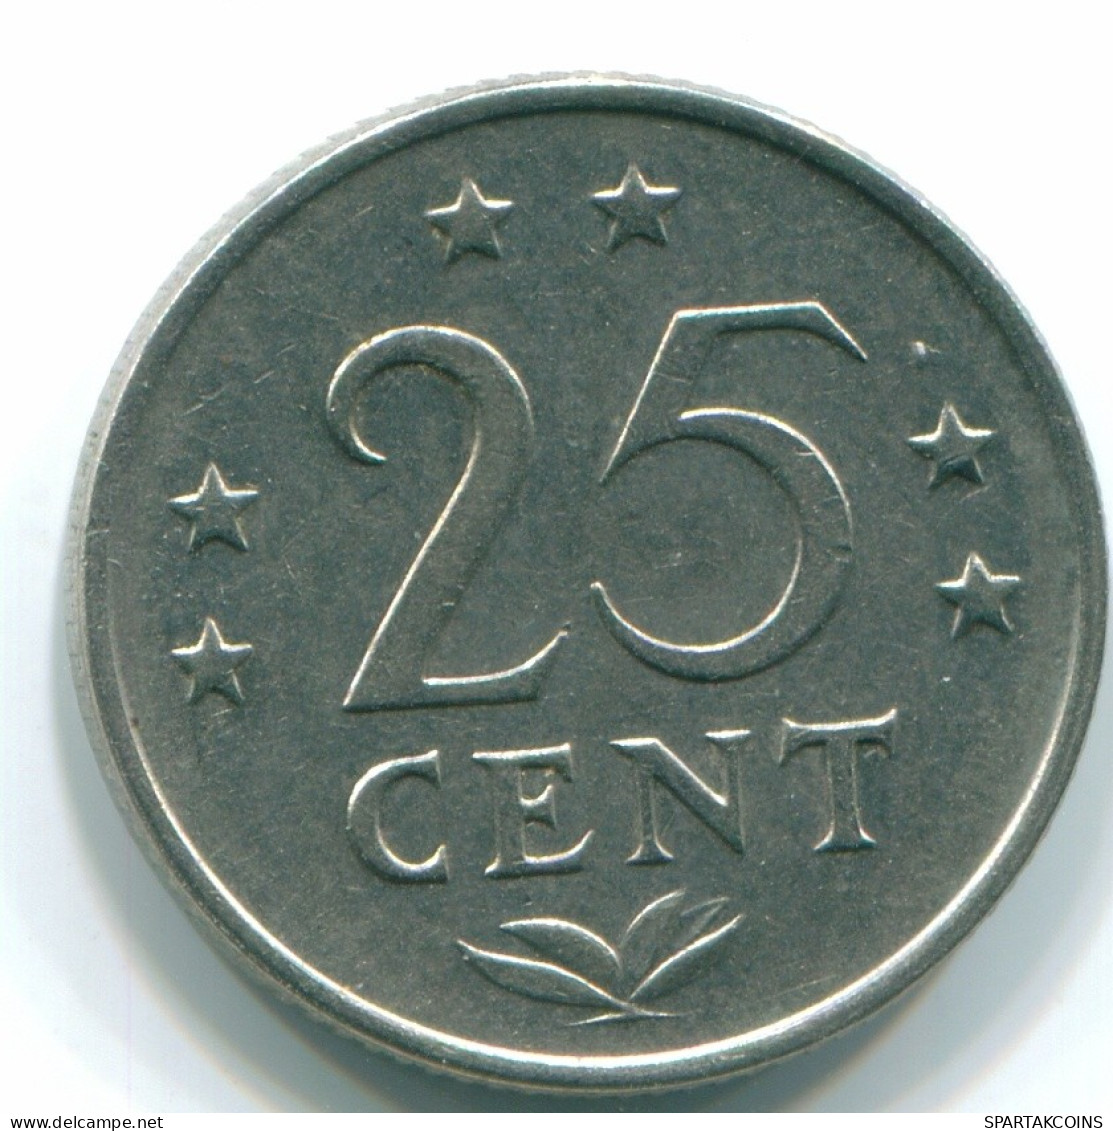 25 CENTS 1971 NETHERLANDS ANTILLES Nickel Colonial Coin #S11544.U.A - Nederlandse Antillen